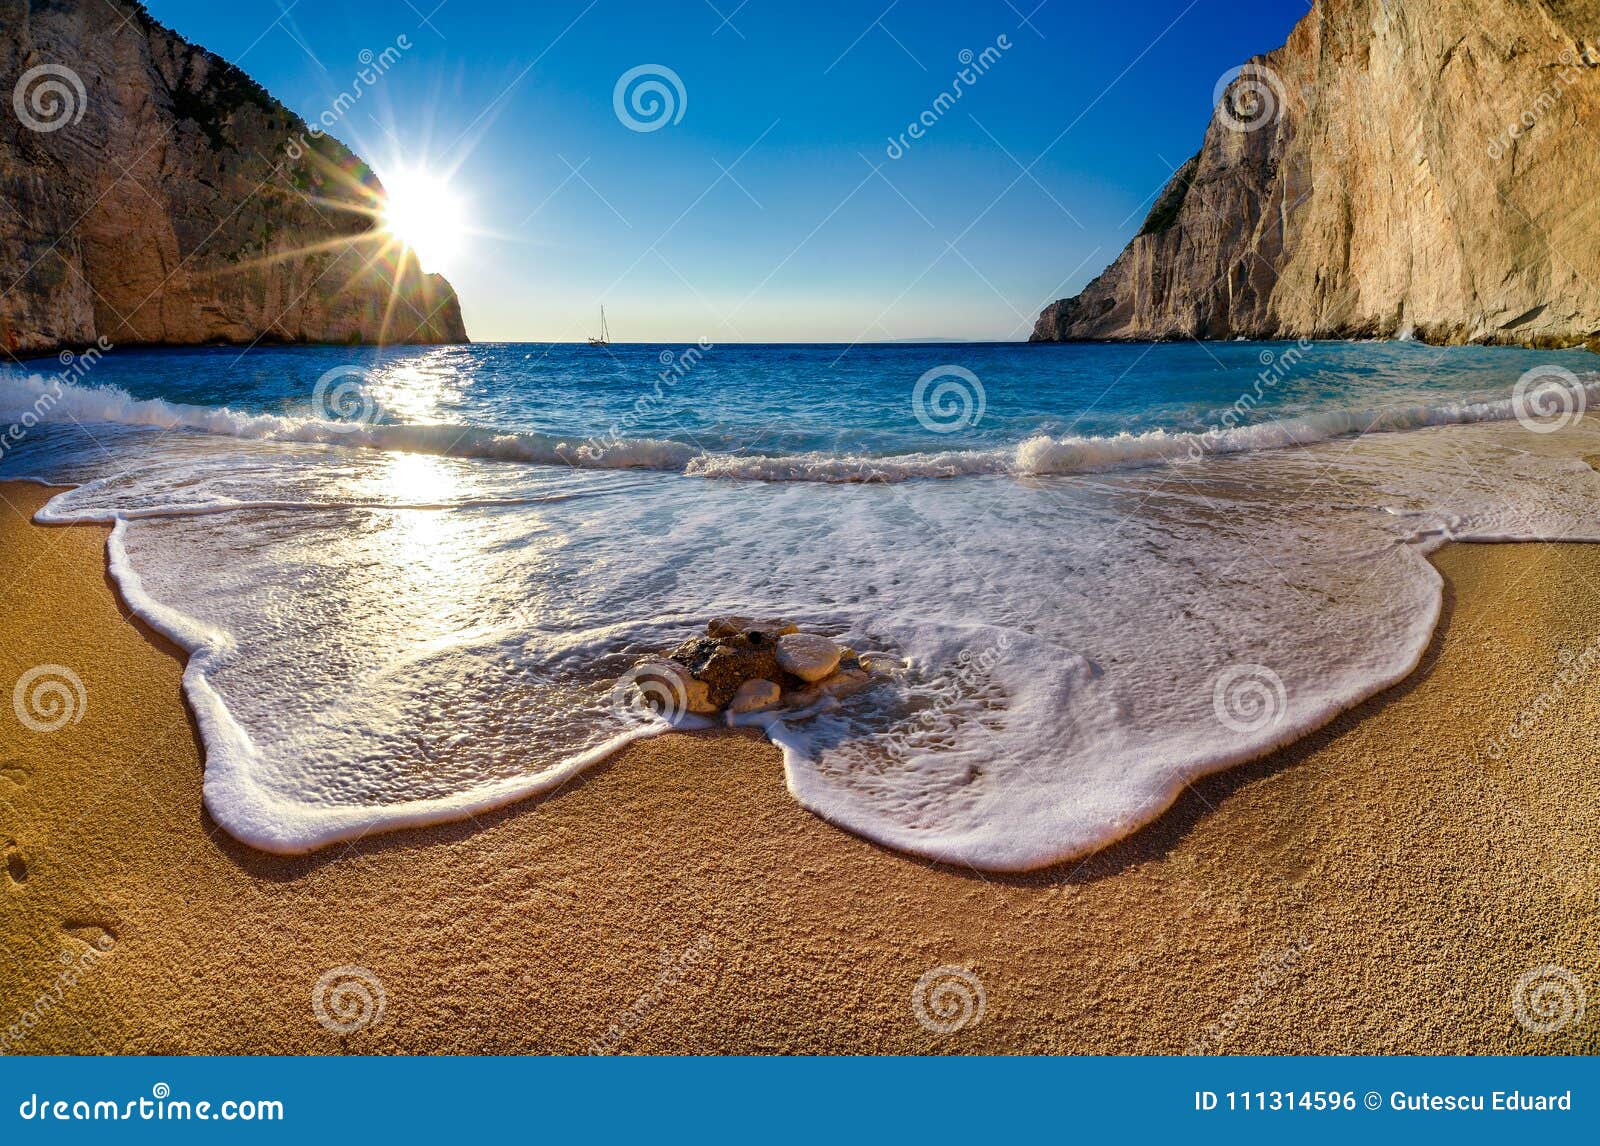 navagio beach at sunset in zakyntos island greece